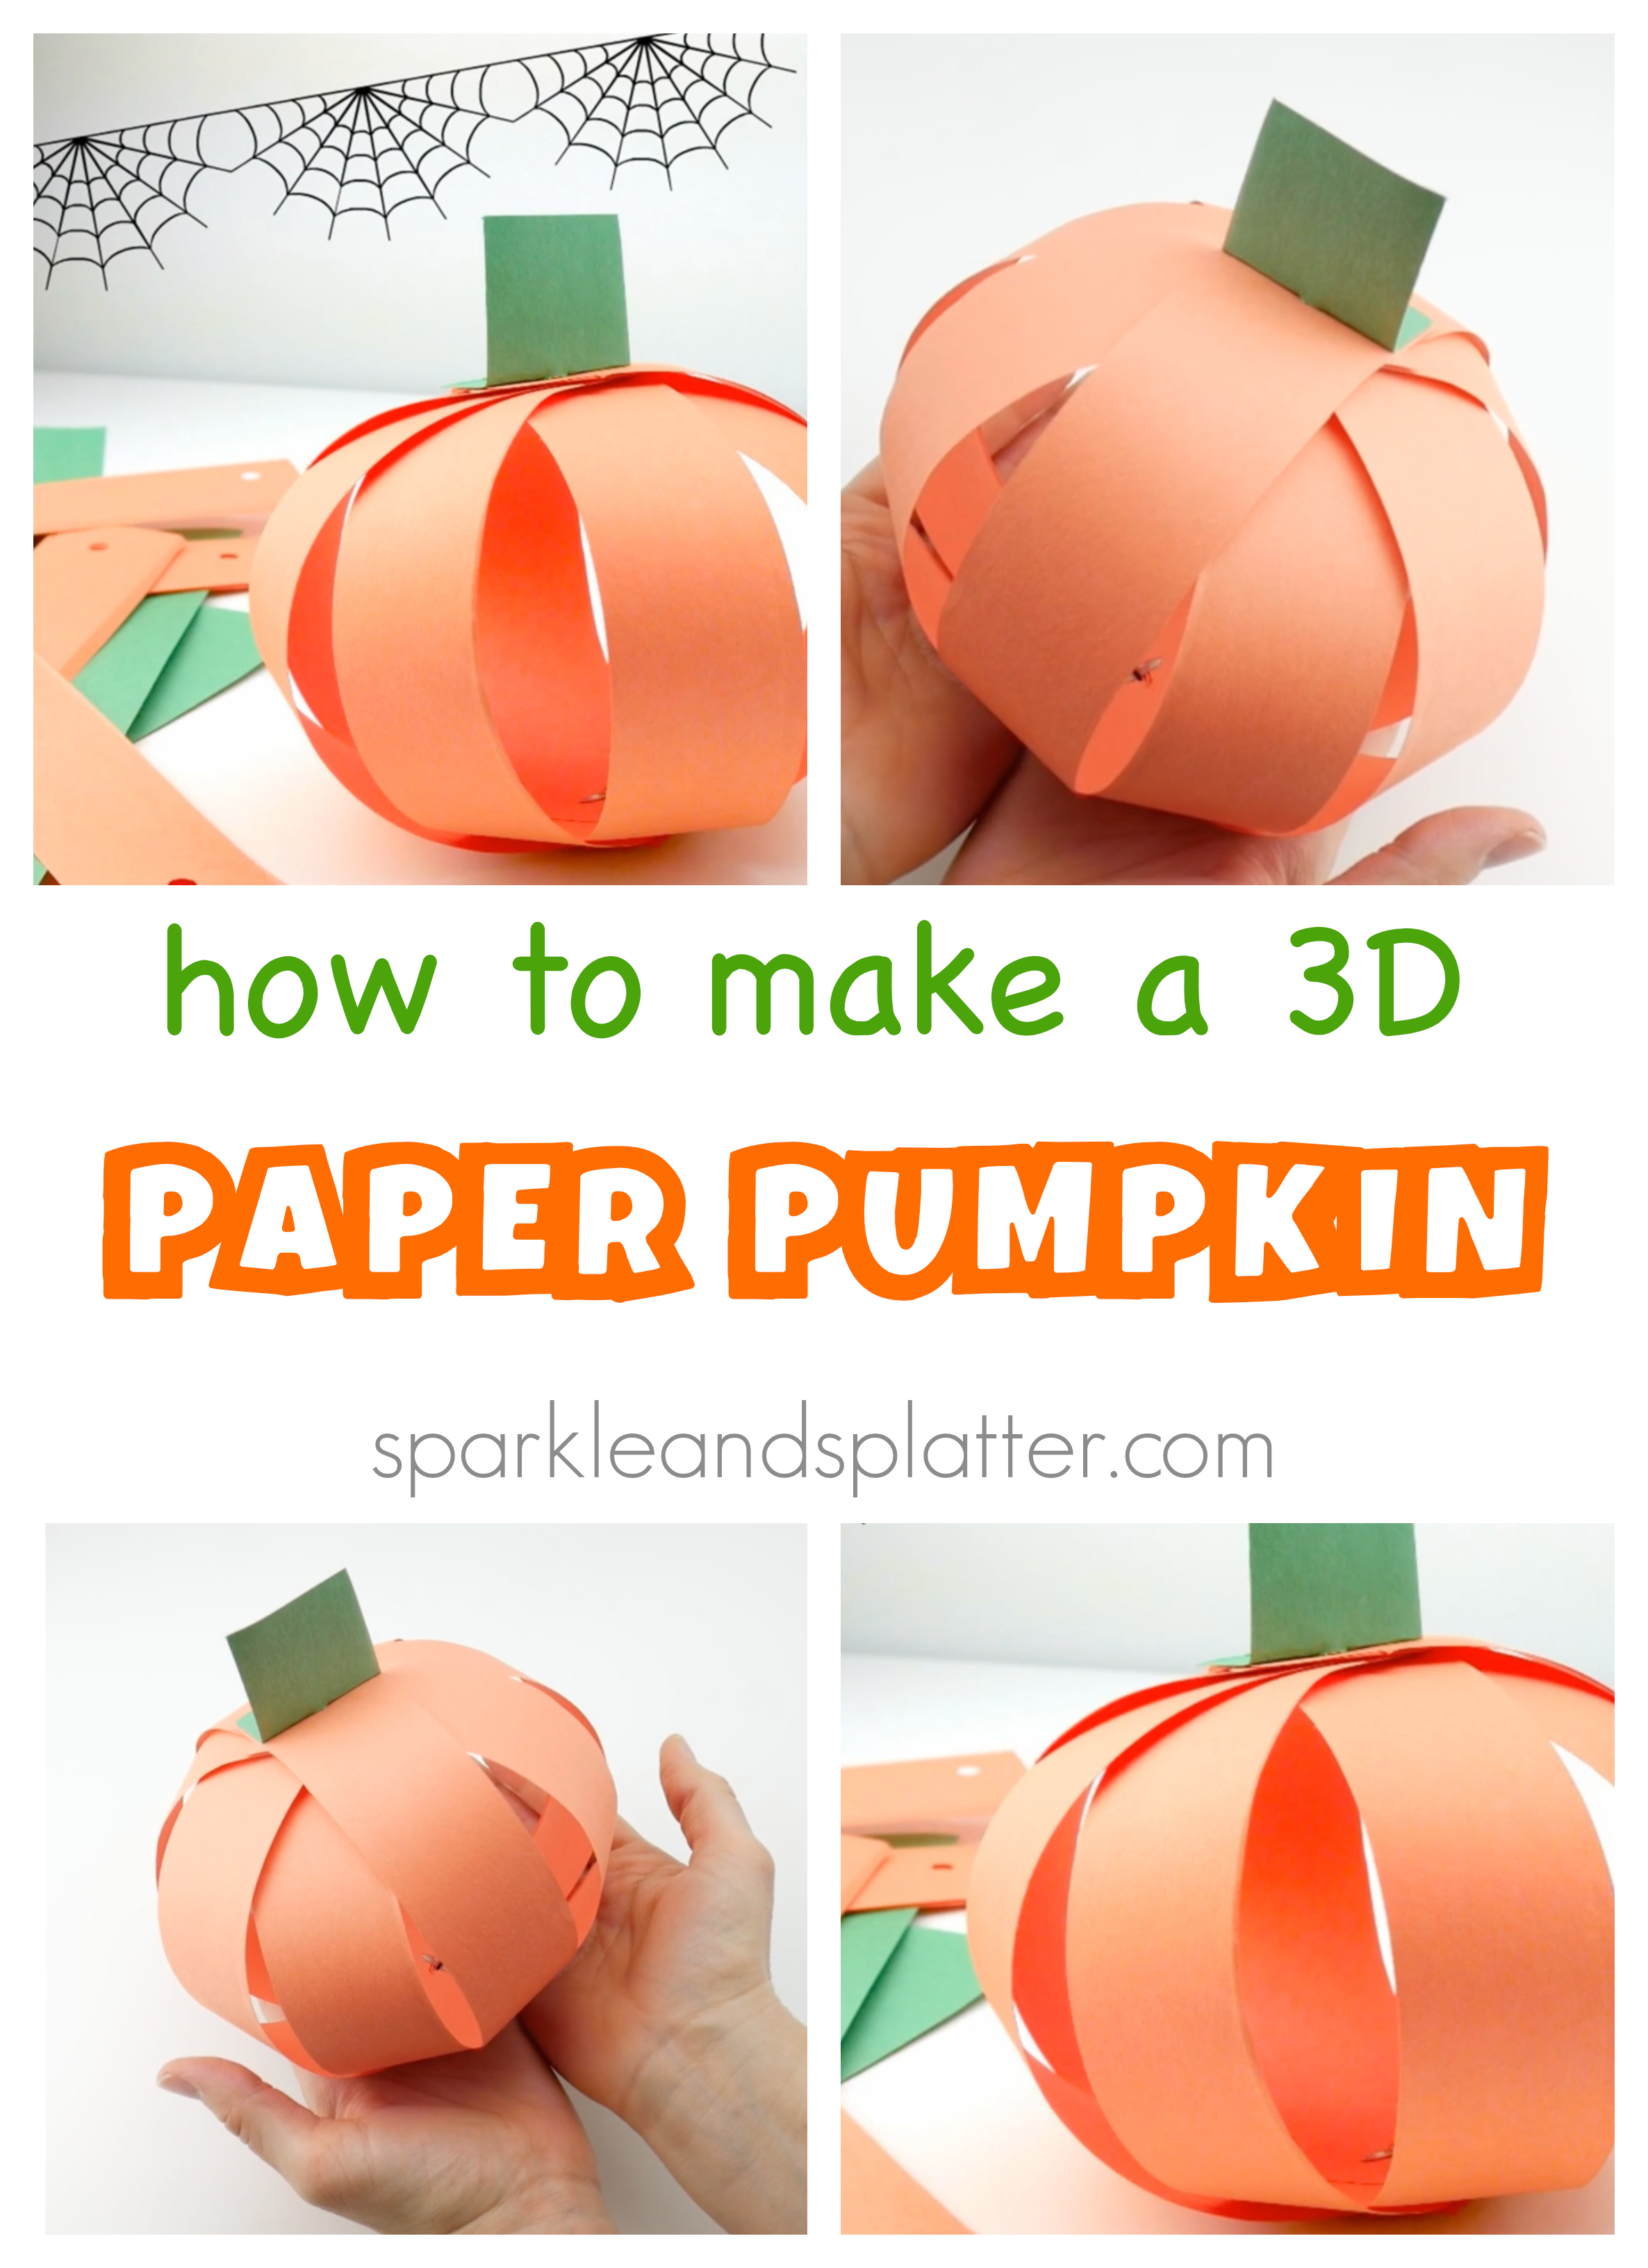 Sparkle and Splatter: How To Make A 3D Paper Pumpkin + Video Tutorial